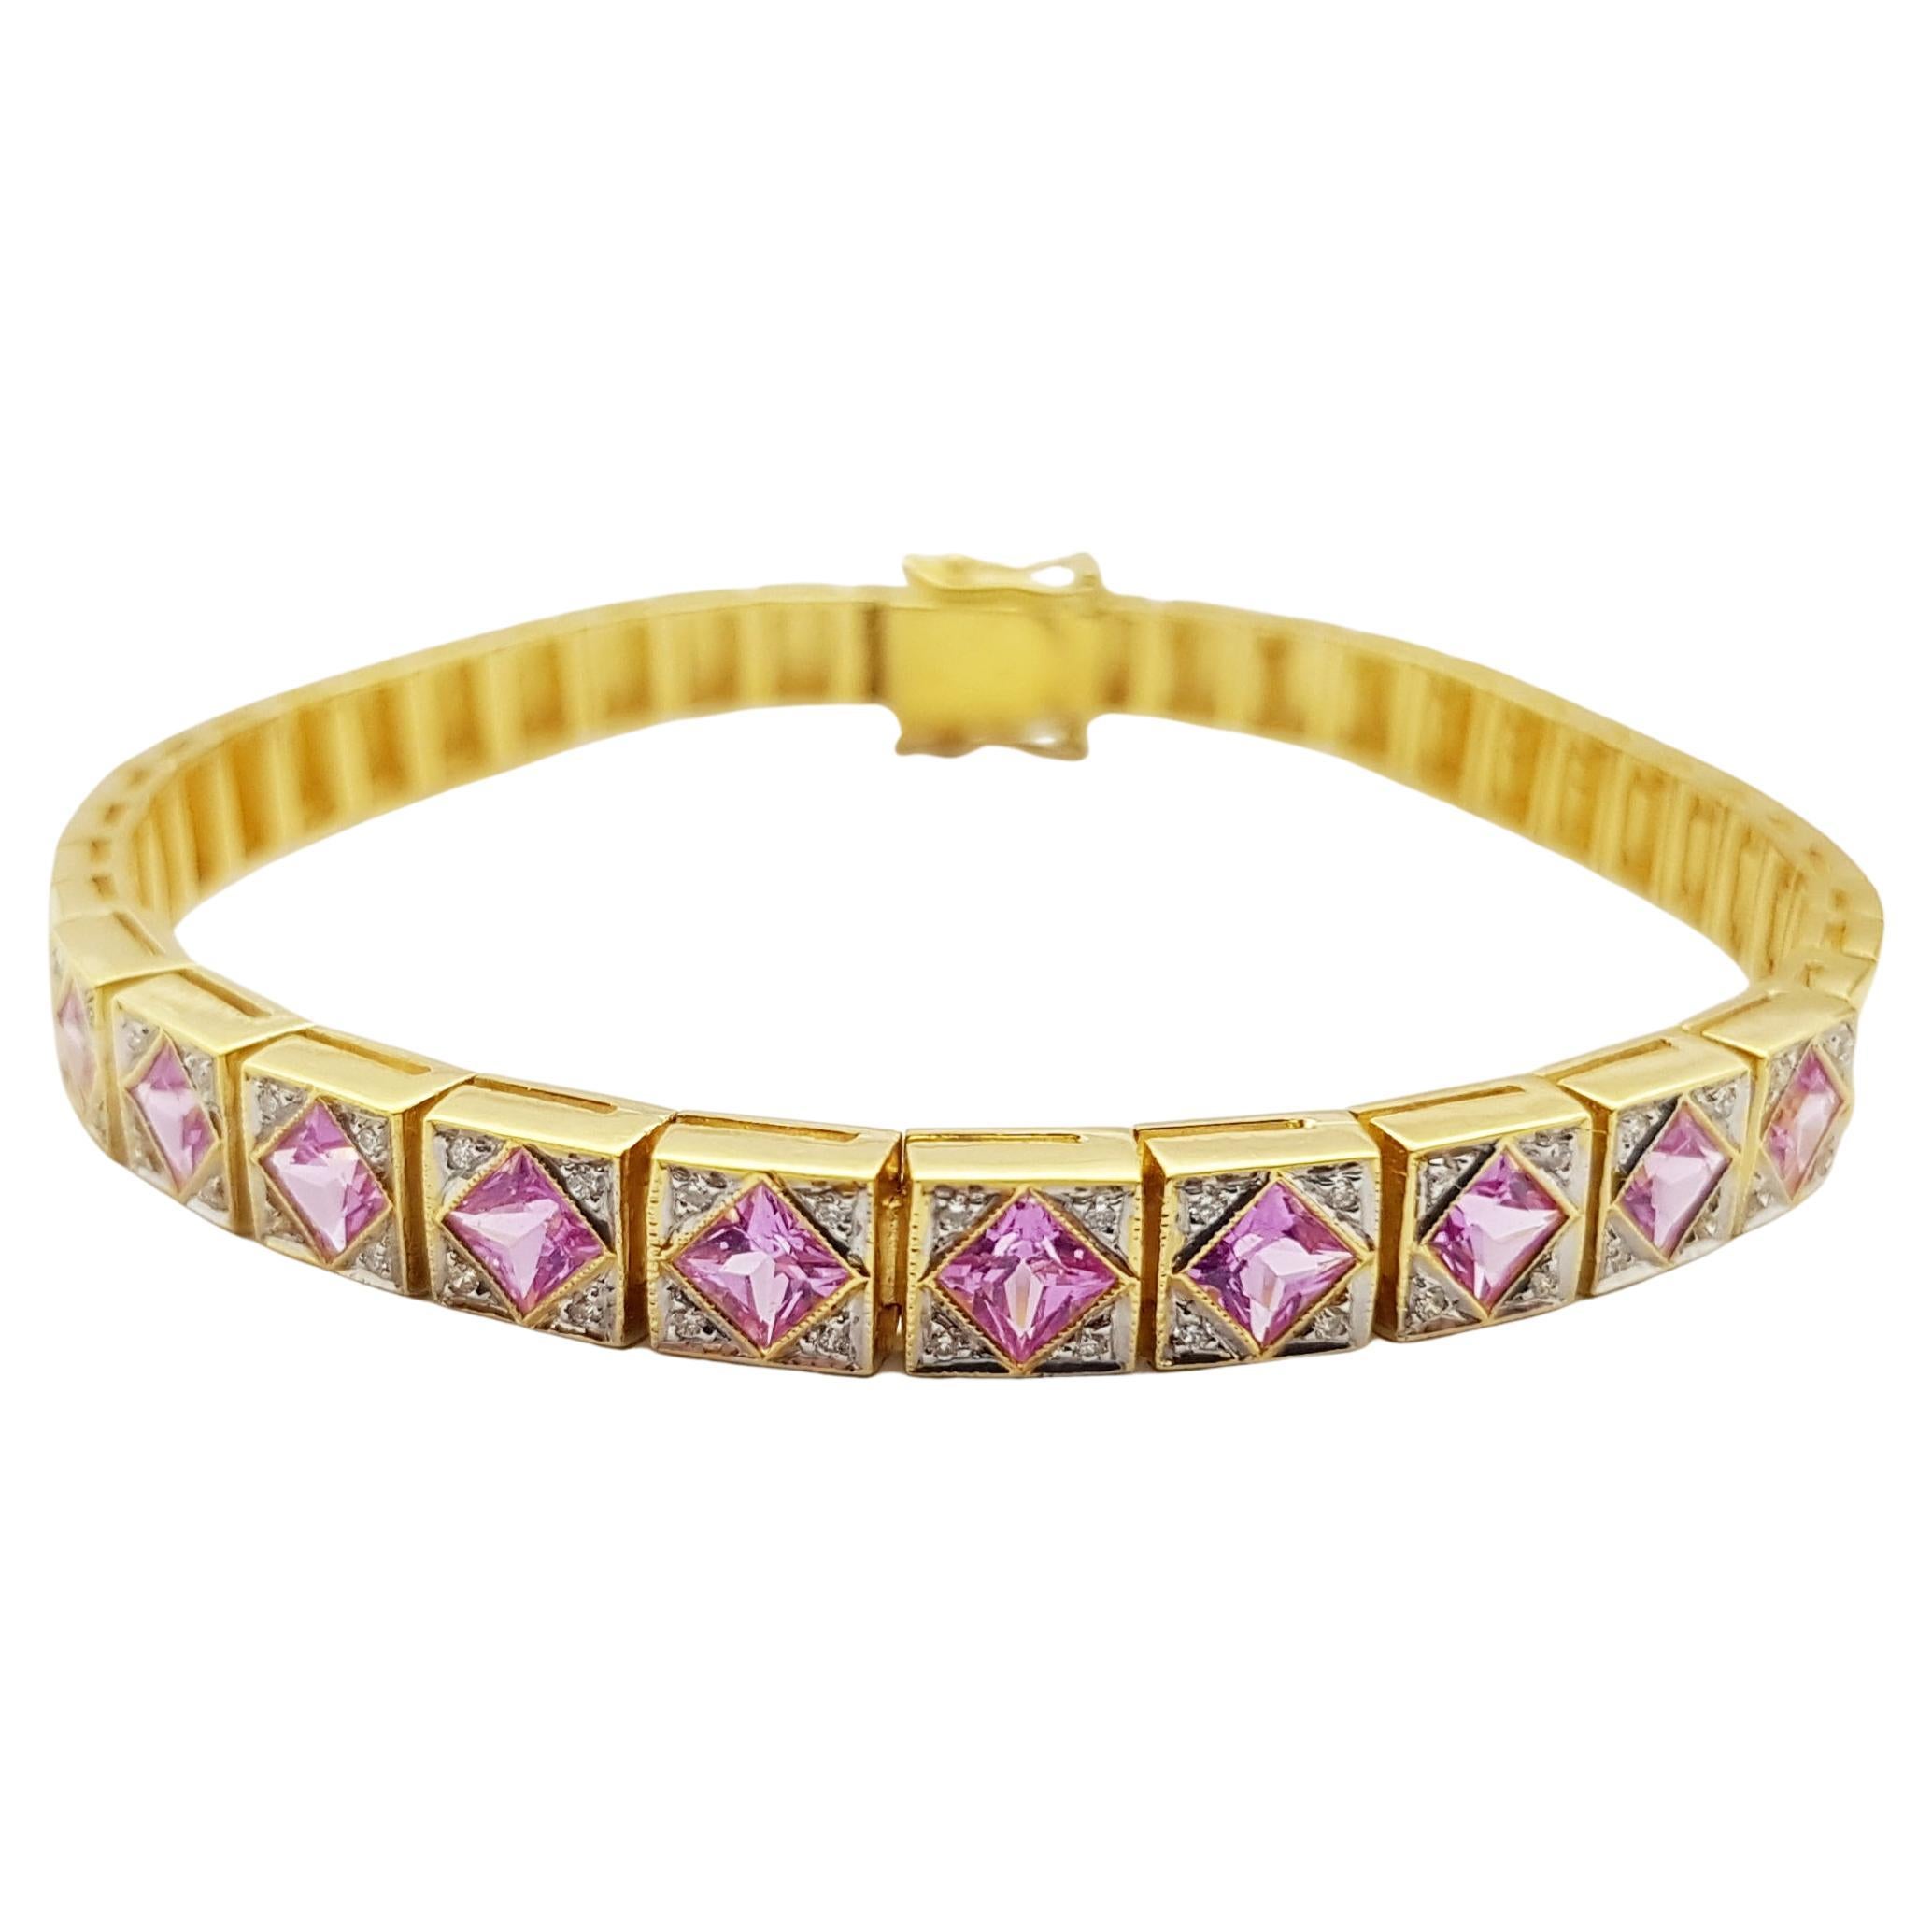 Pink Sapphire with Diamond Bracelet Set in 18 Karat Gold Settings